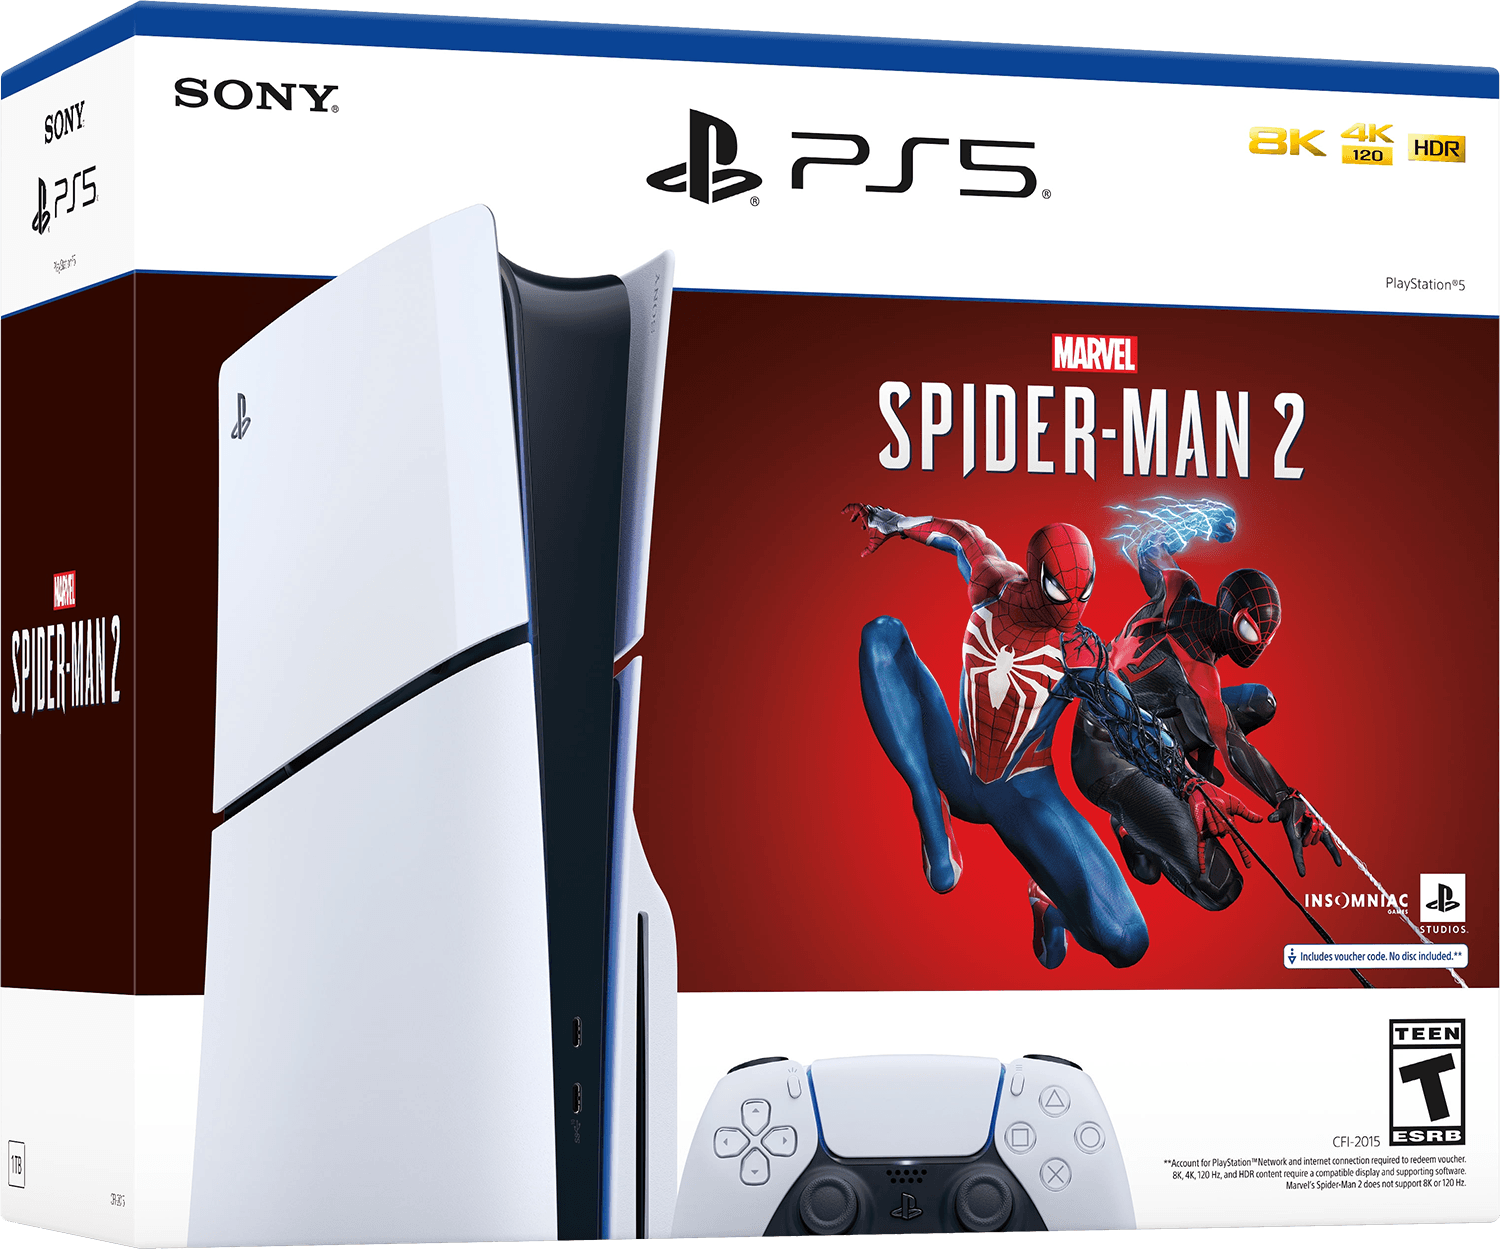 PlayStation 5 Slim 1TB Console - Glacier White + Spider-Man 2 Game Bundle (NTSC/U)(PS5)